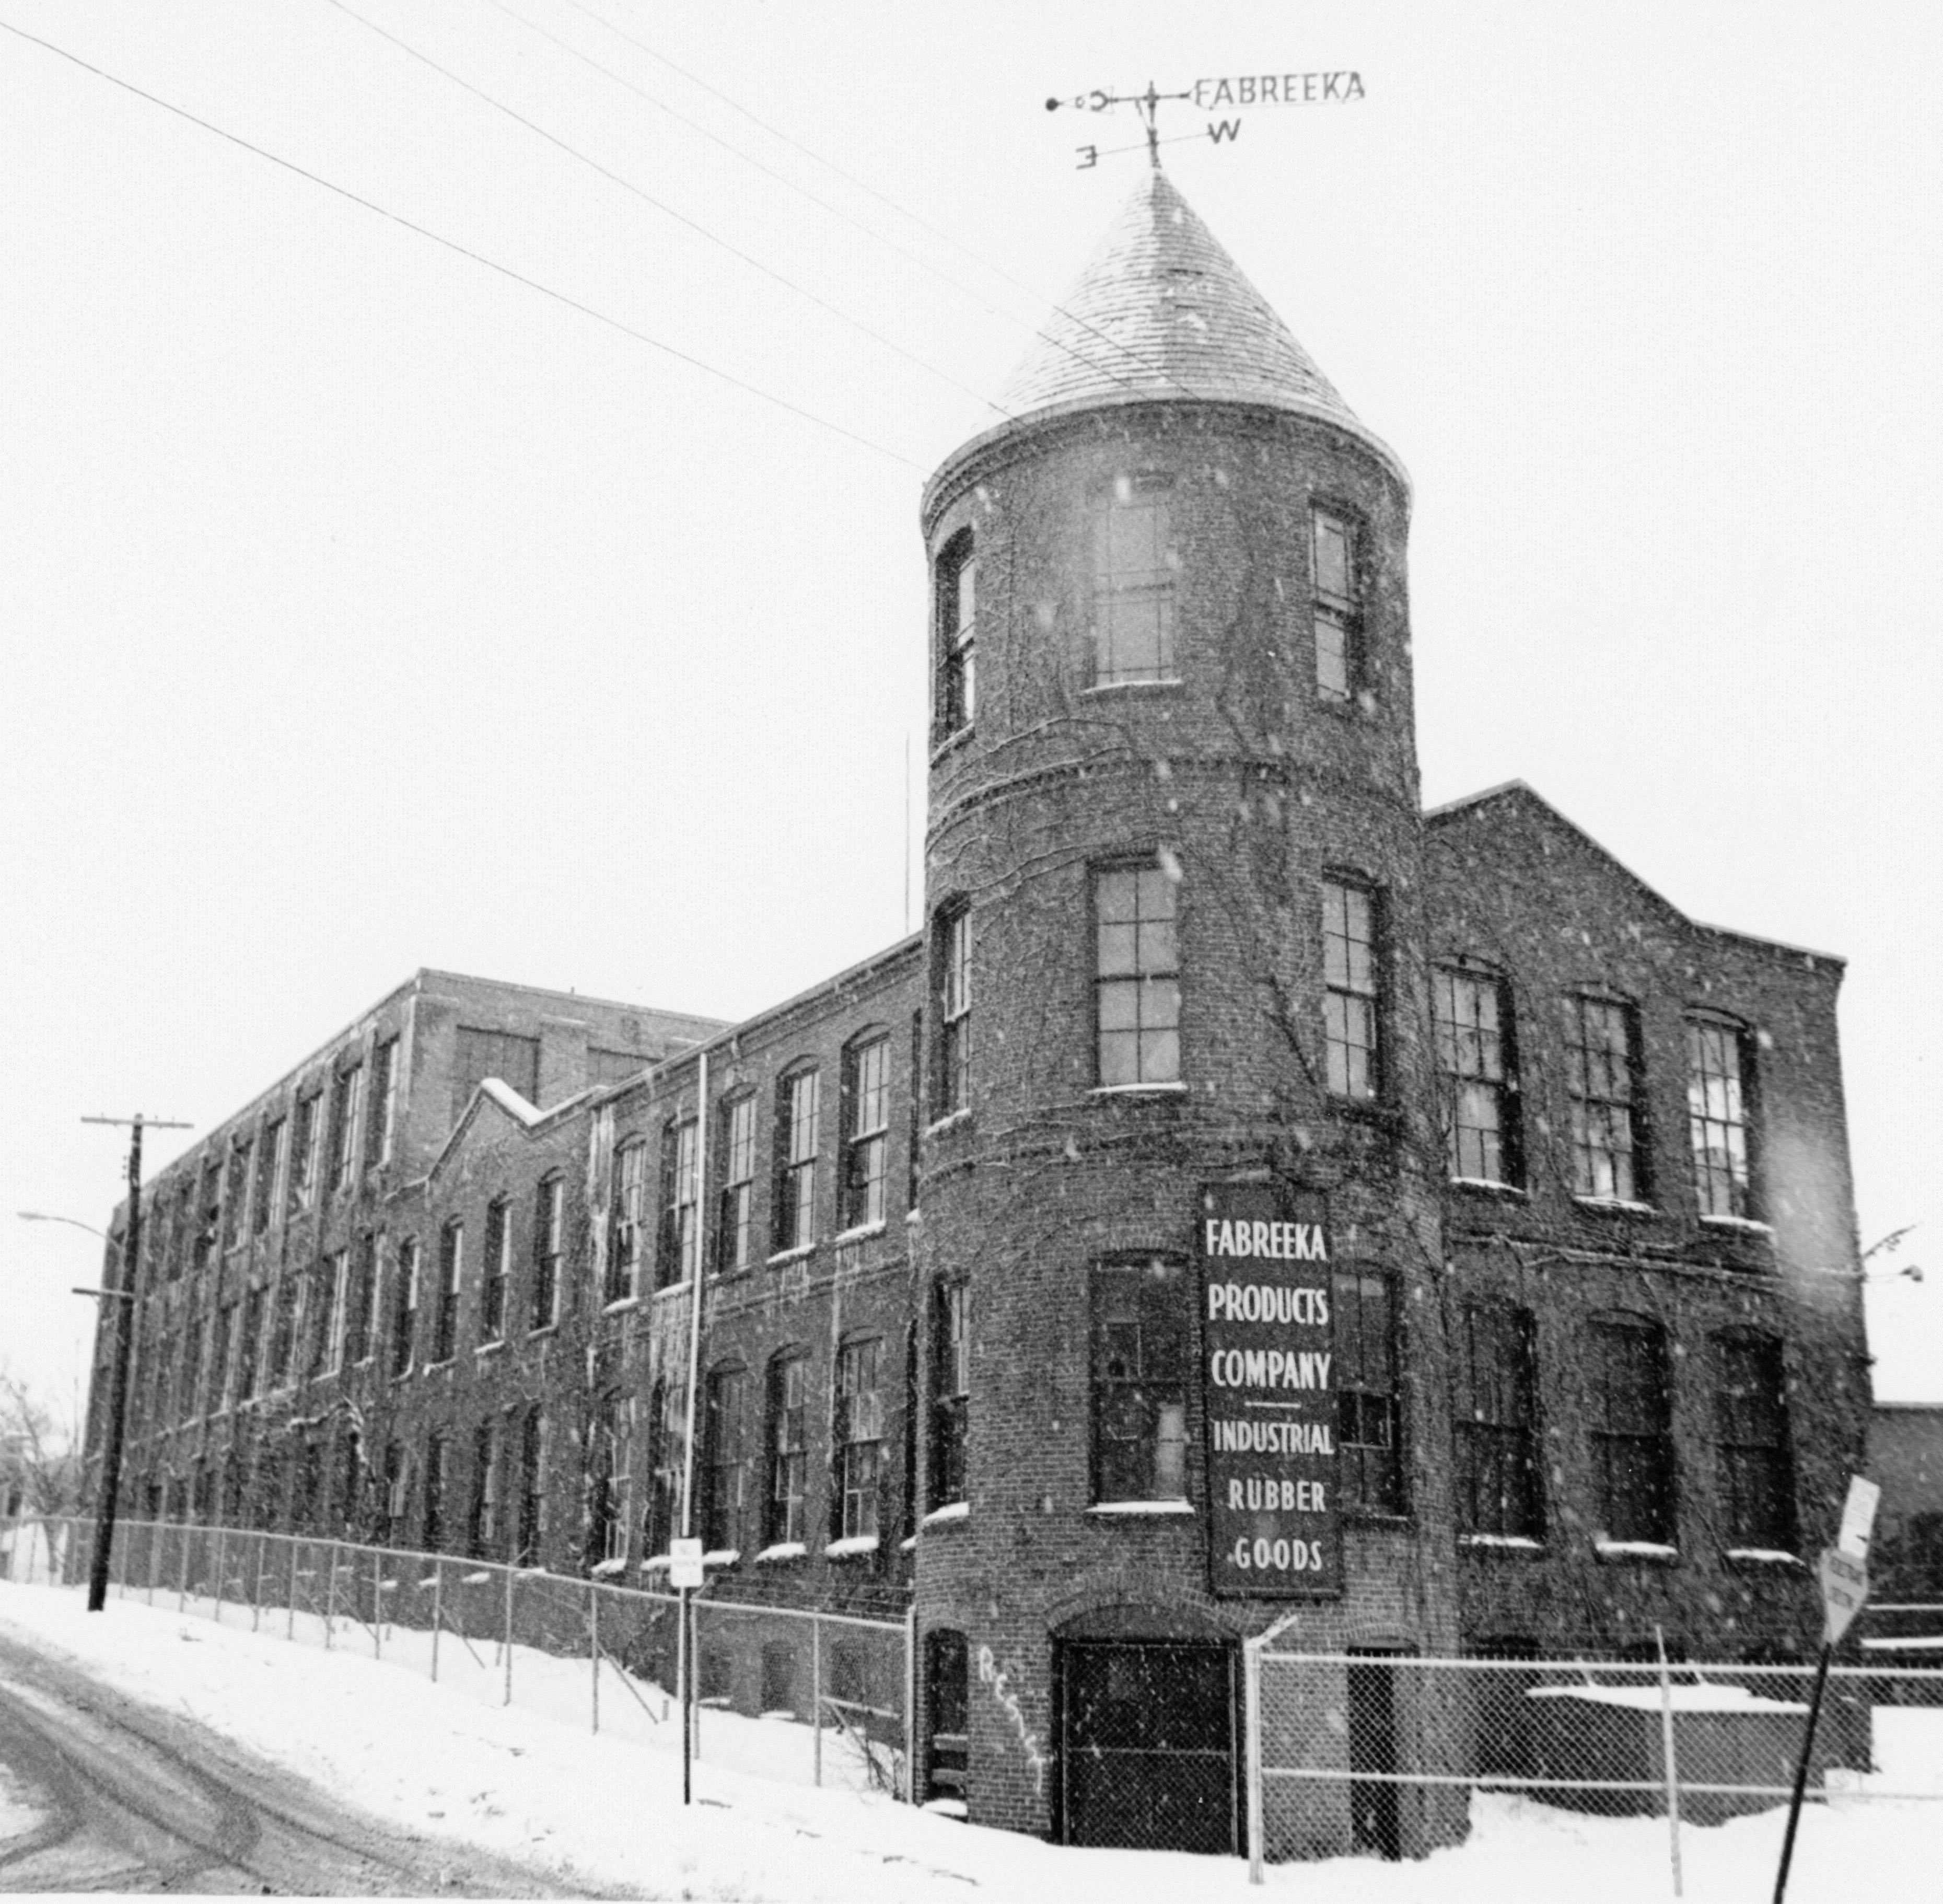 Fabreeka's brick-covered facility during wintertime in Dorchester, MA